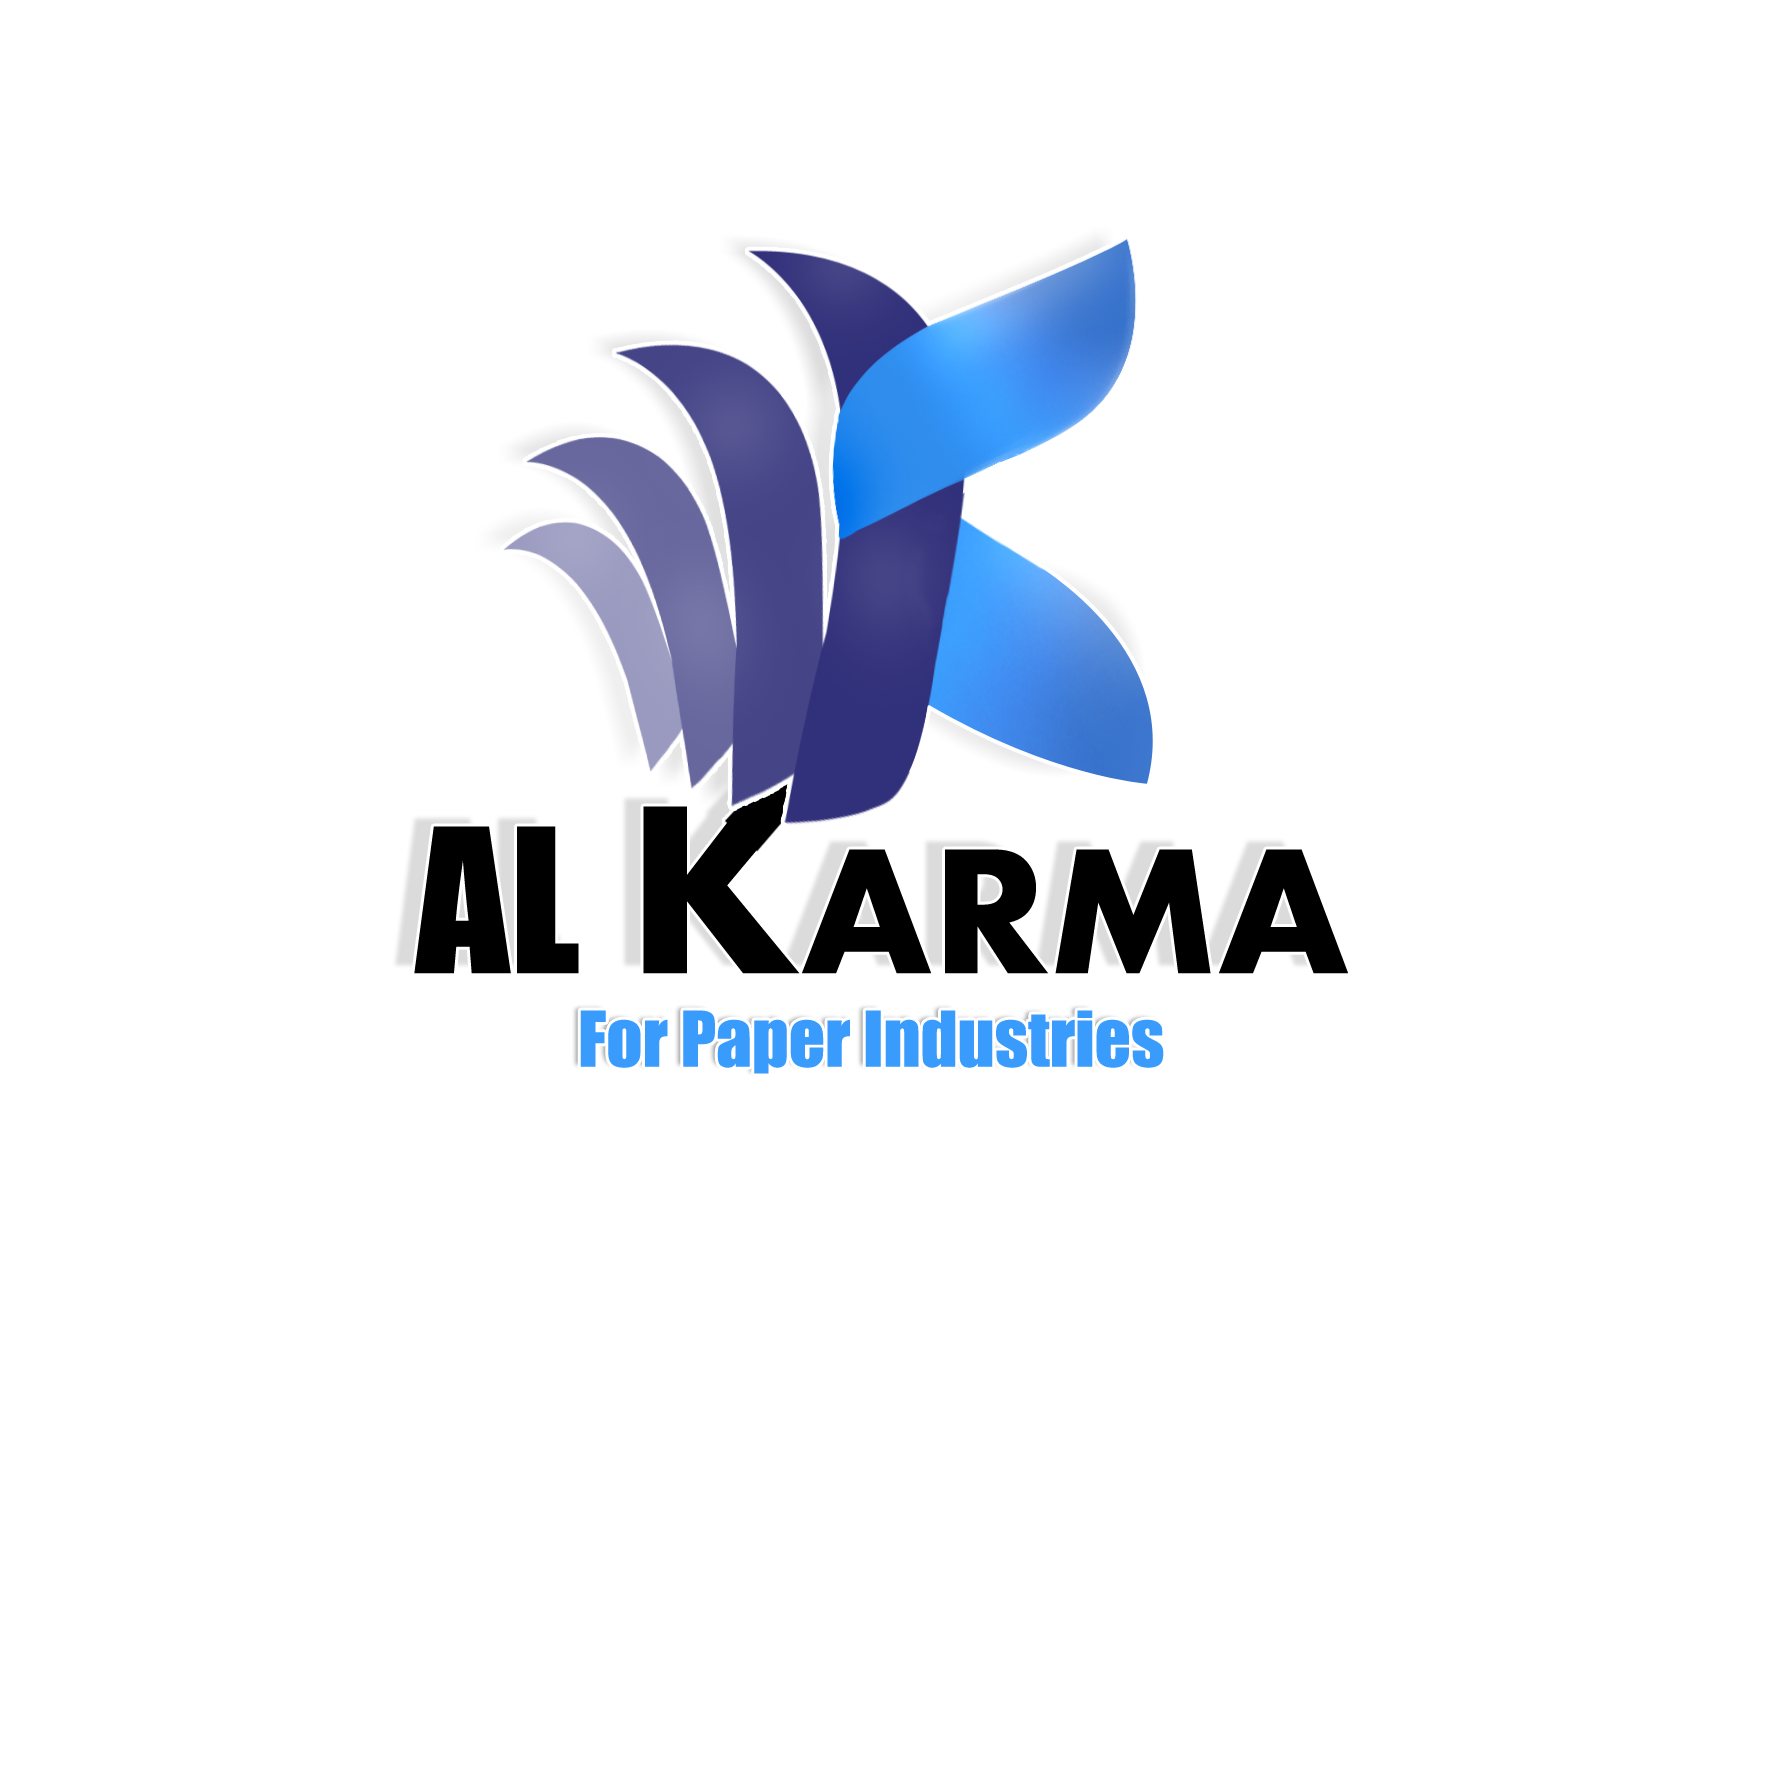 AL KARMA For Paper Industries